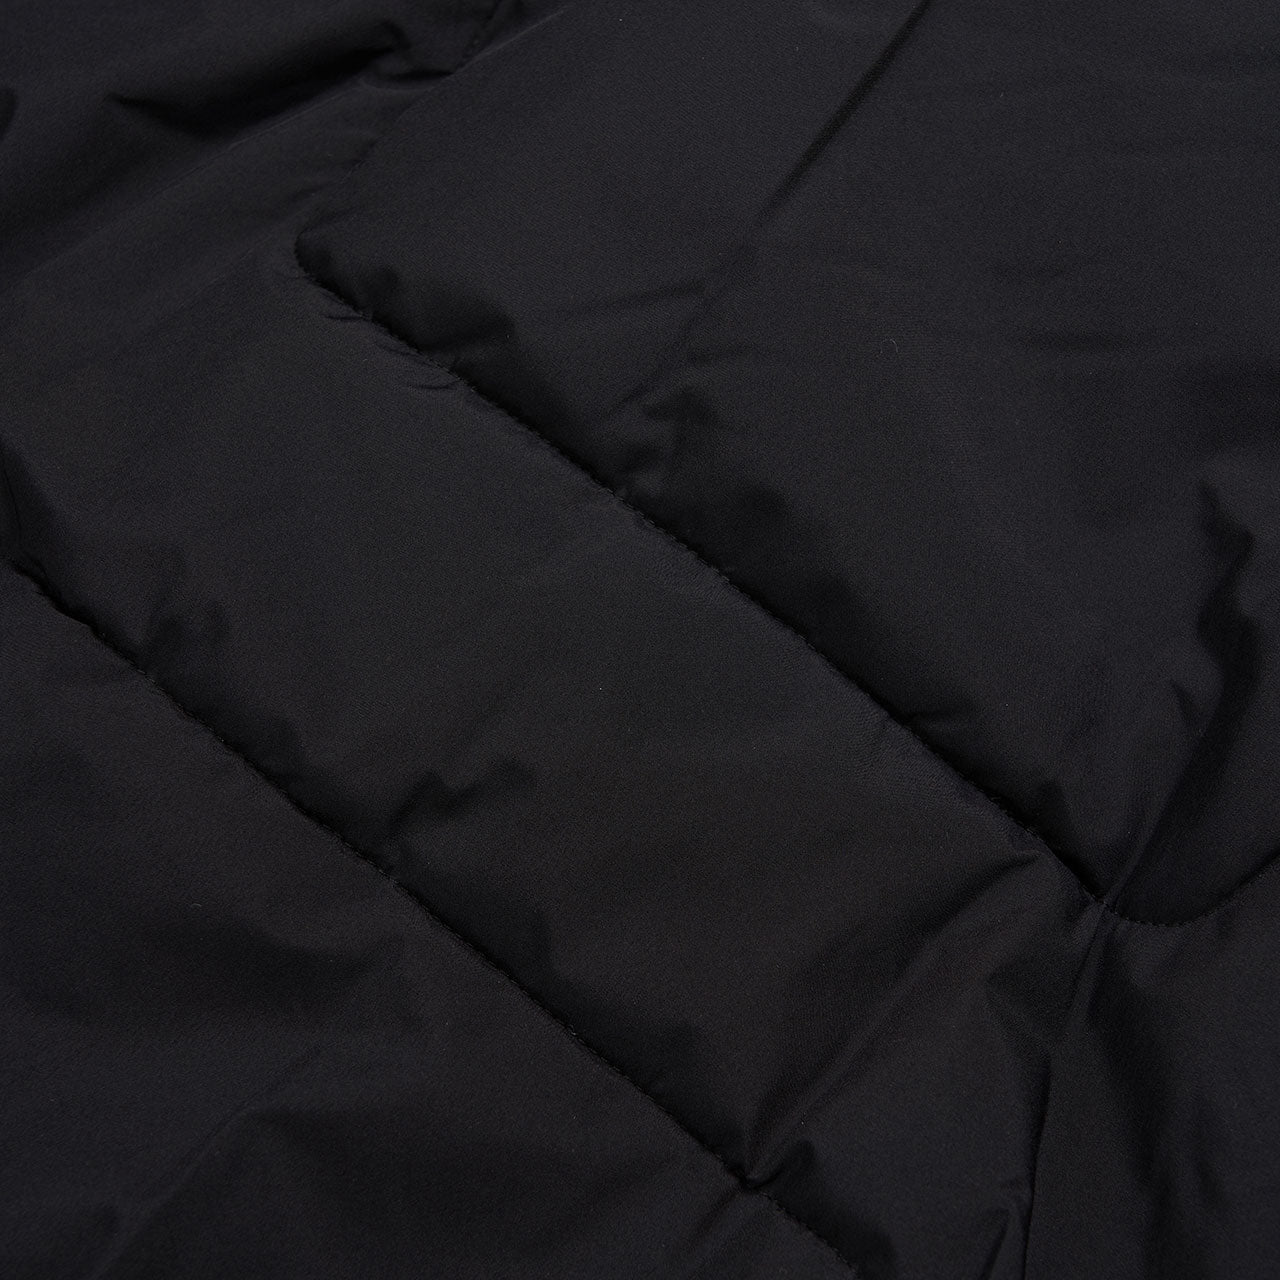 acronym acronym j91-ws modular liner jacket (black)